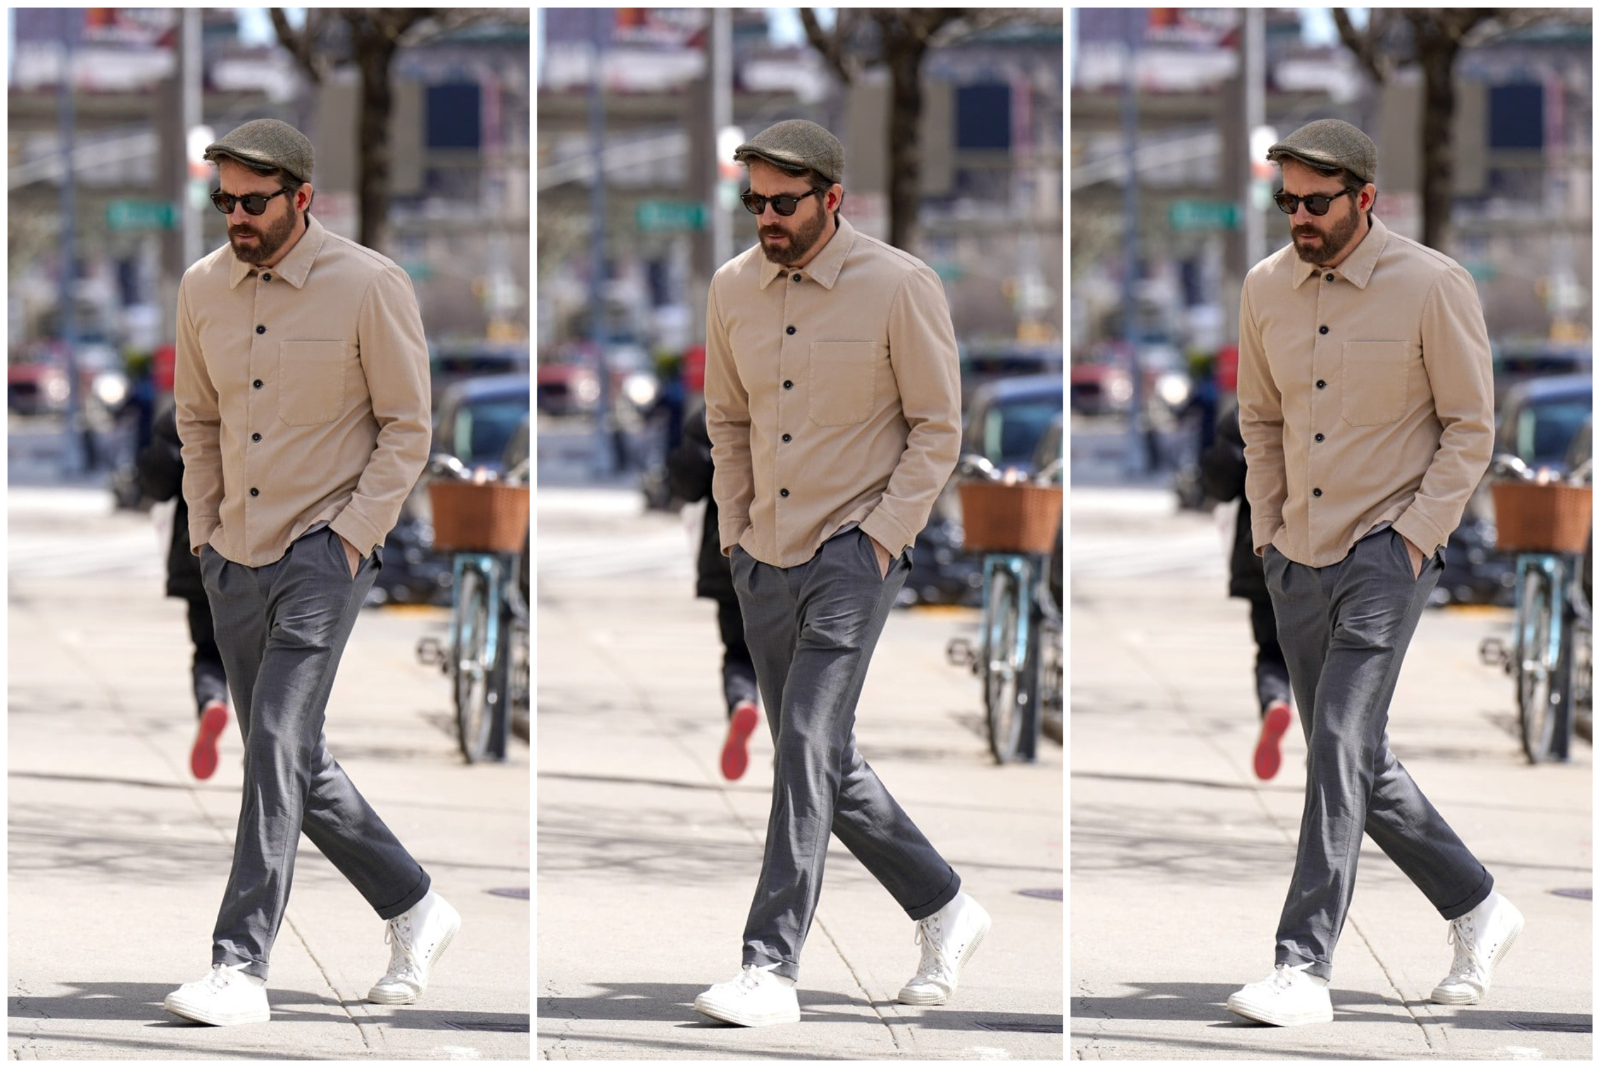 Journal Man: Ryan Reynolds postao je kralj slojevitog odijevanja